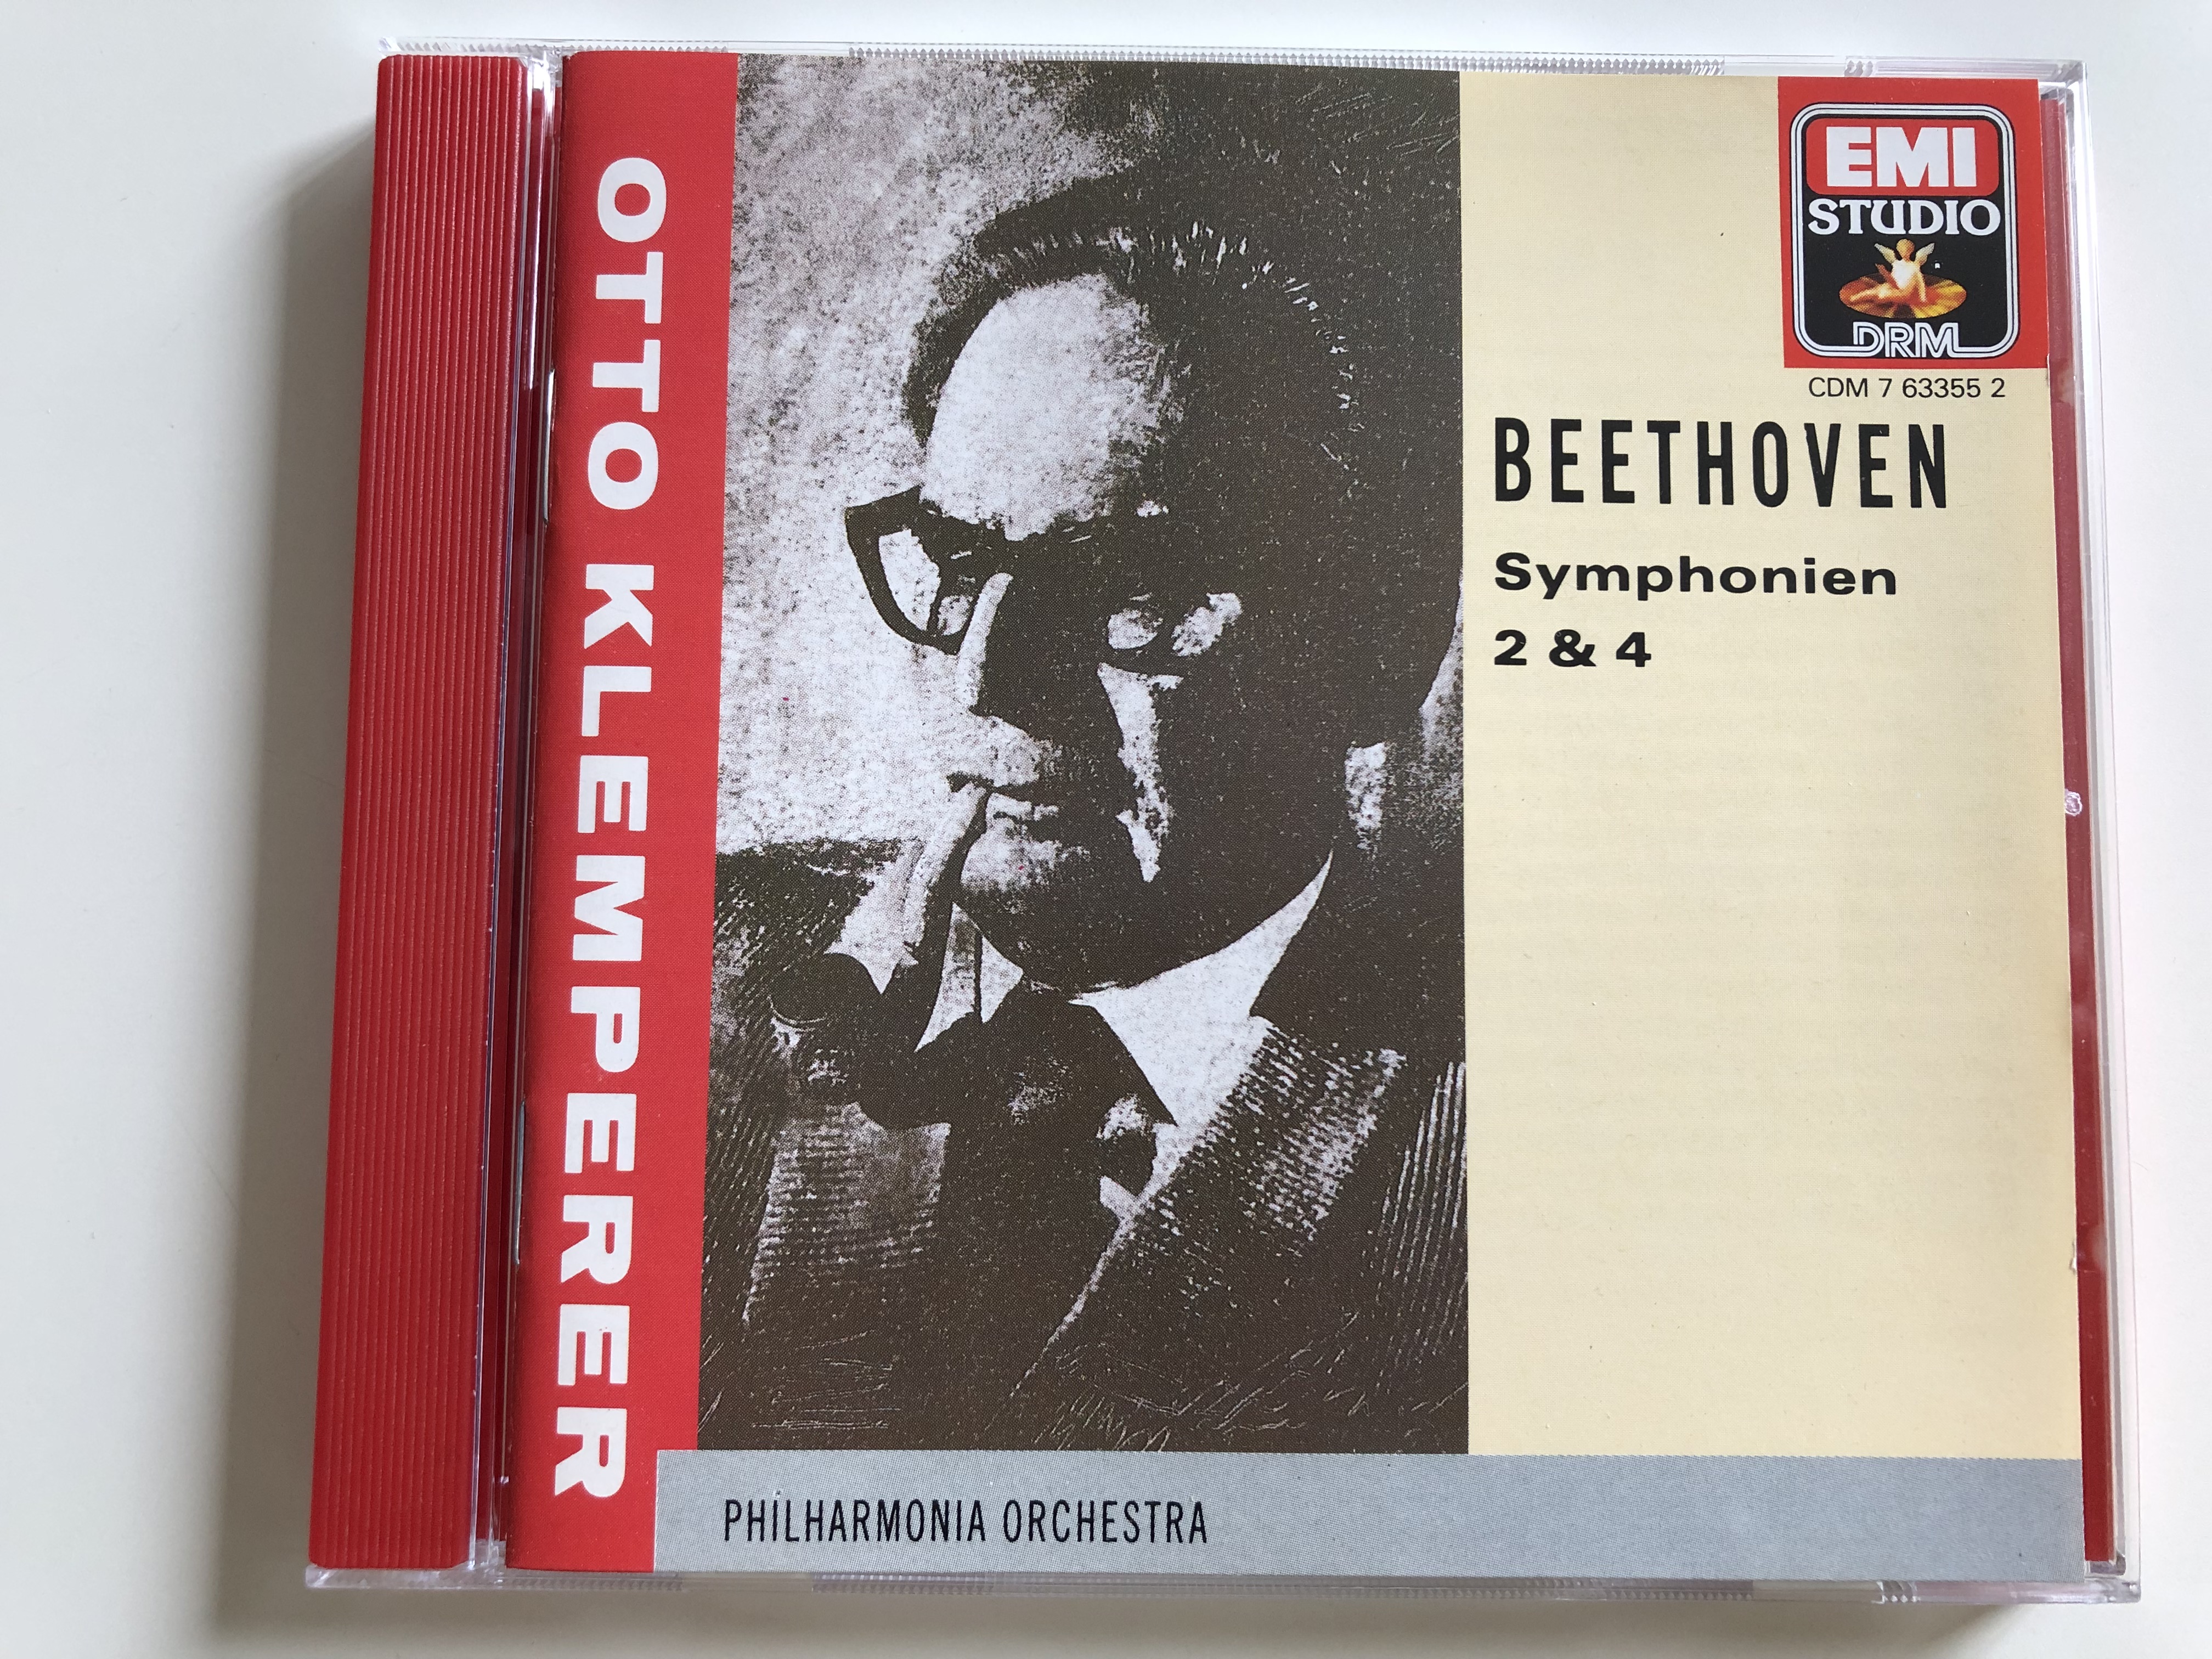 otto-klemperer-beethoven-symphonien-2-4-philharmonia-orchestra-emi-studio-audio-cd-1990-cdm-7633552-2-.jpg